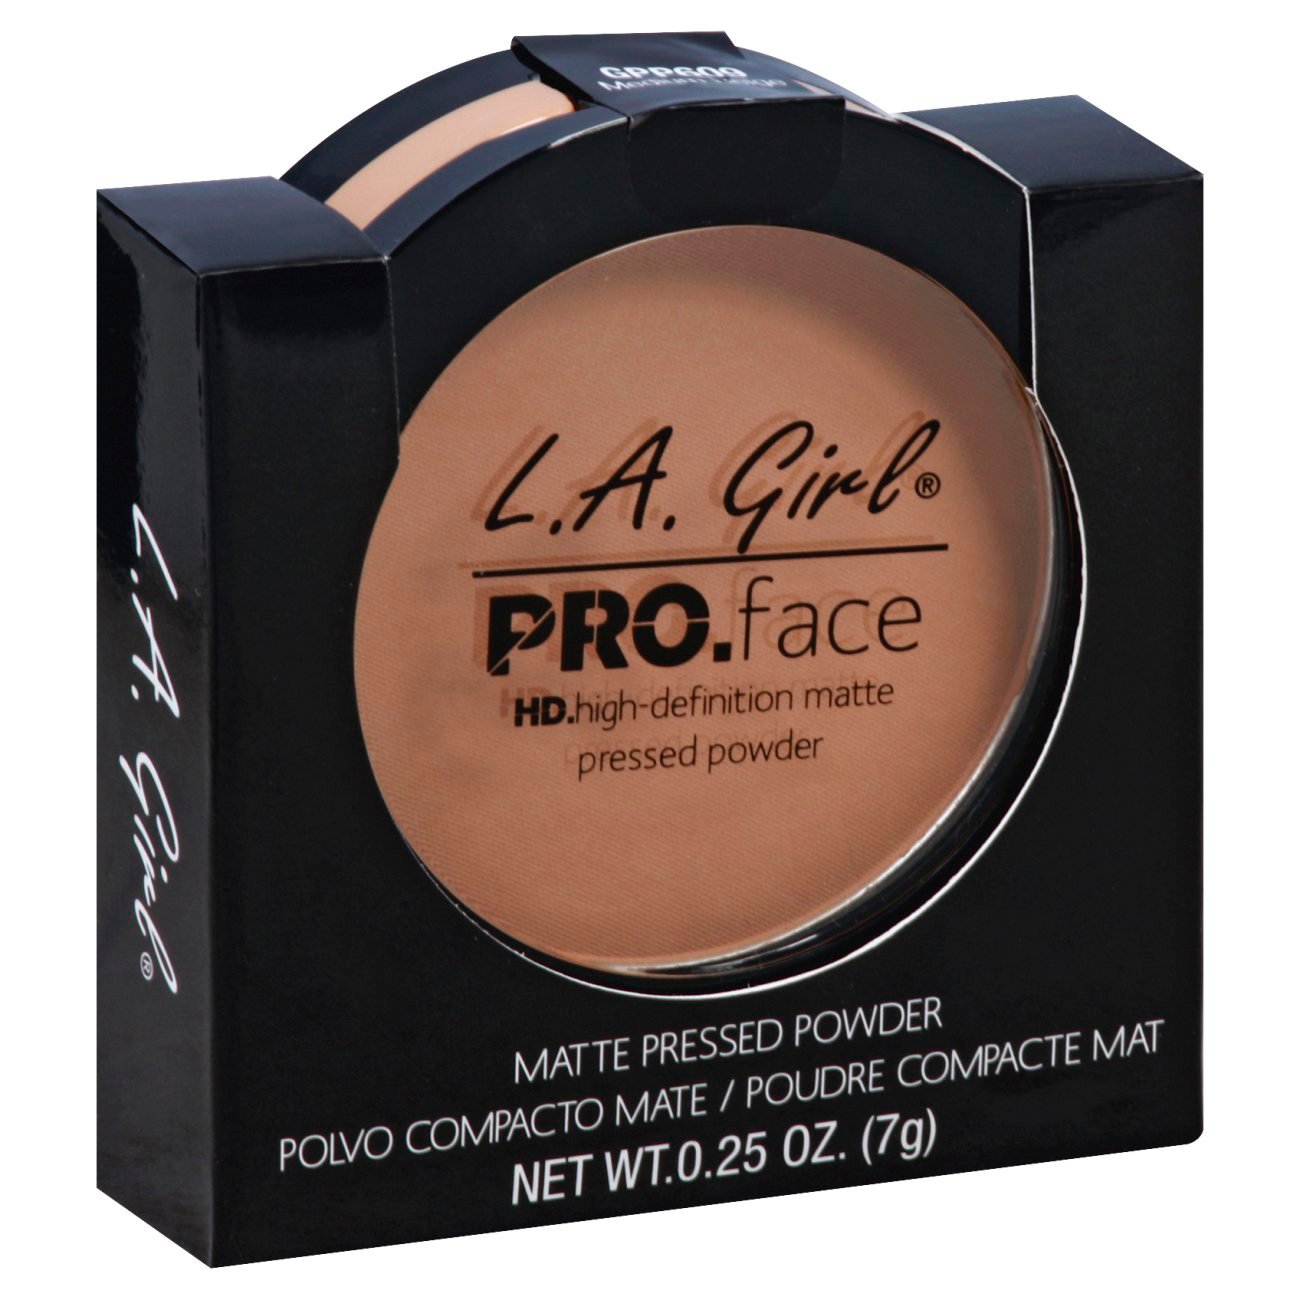 La Girl Pro Face Matte Pressed Powder Medium Beige Shop Face At H E B